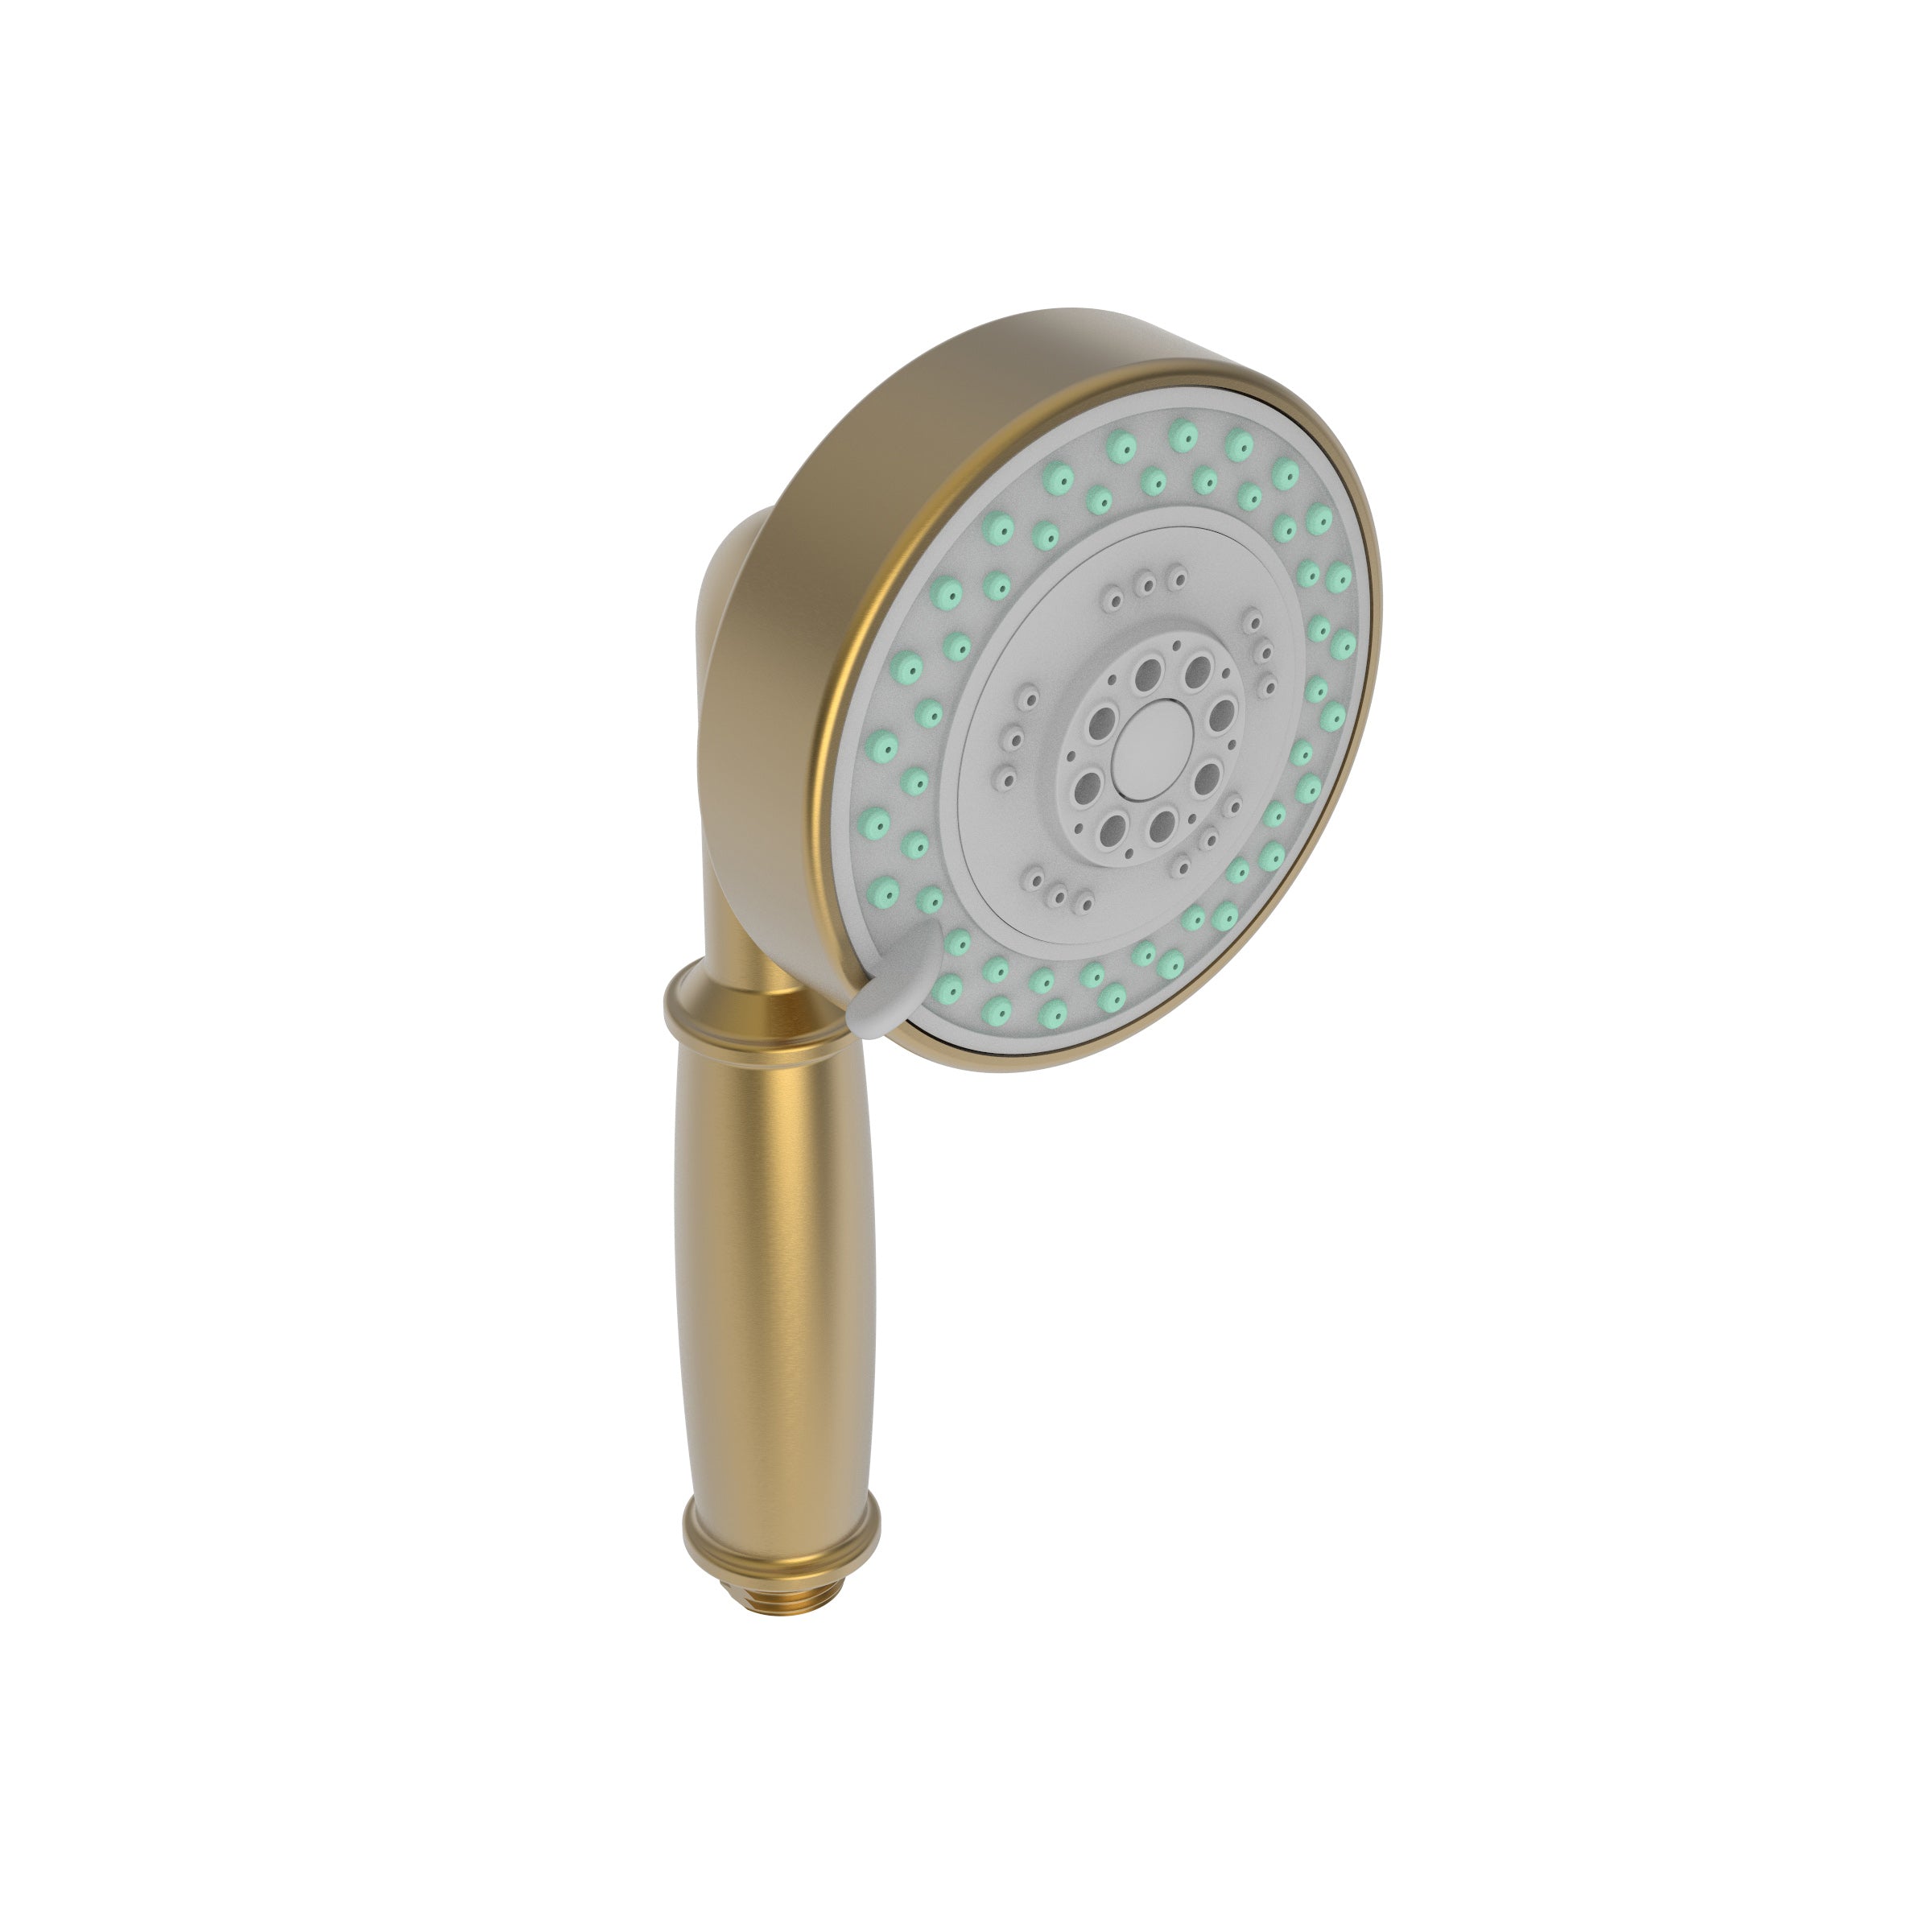 Newport Brass Tub & Shower Multifunction Hand Shower